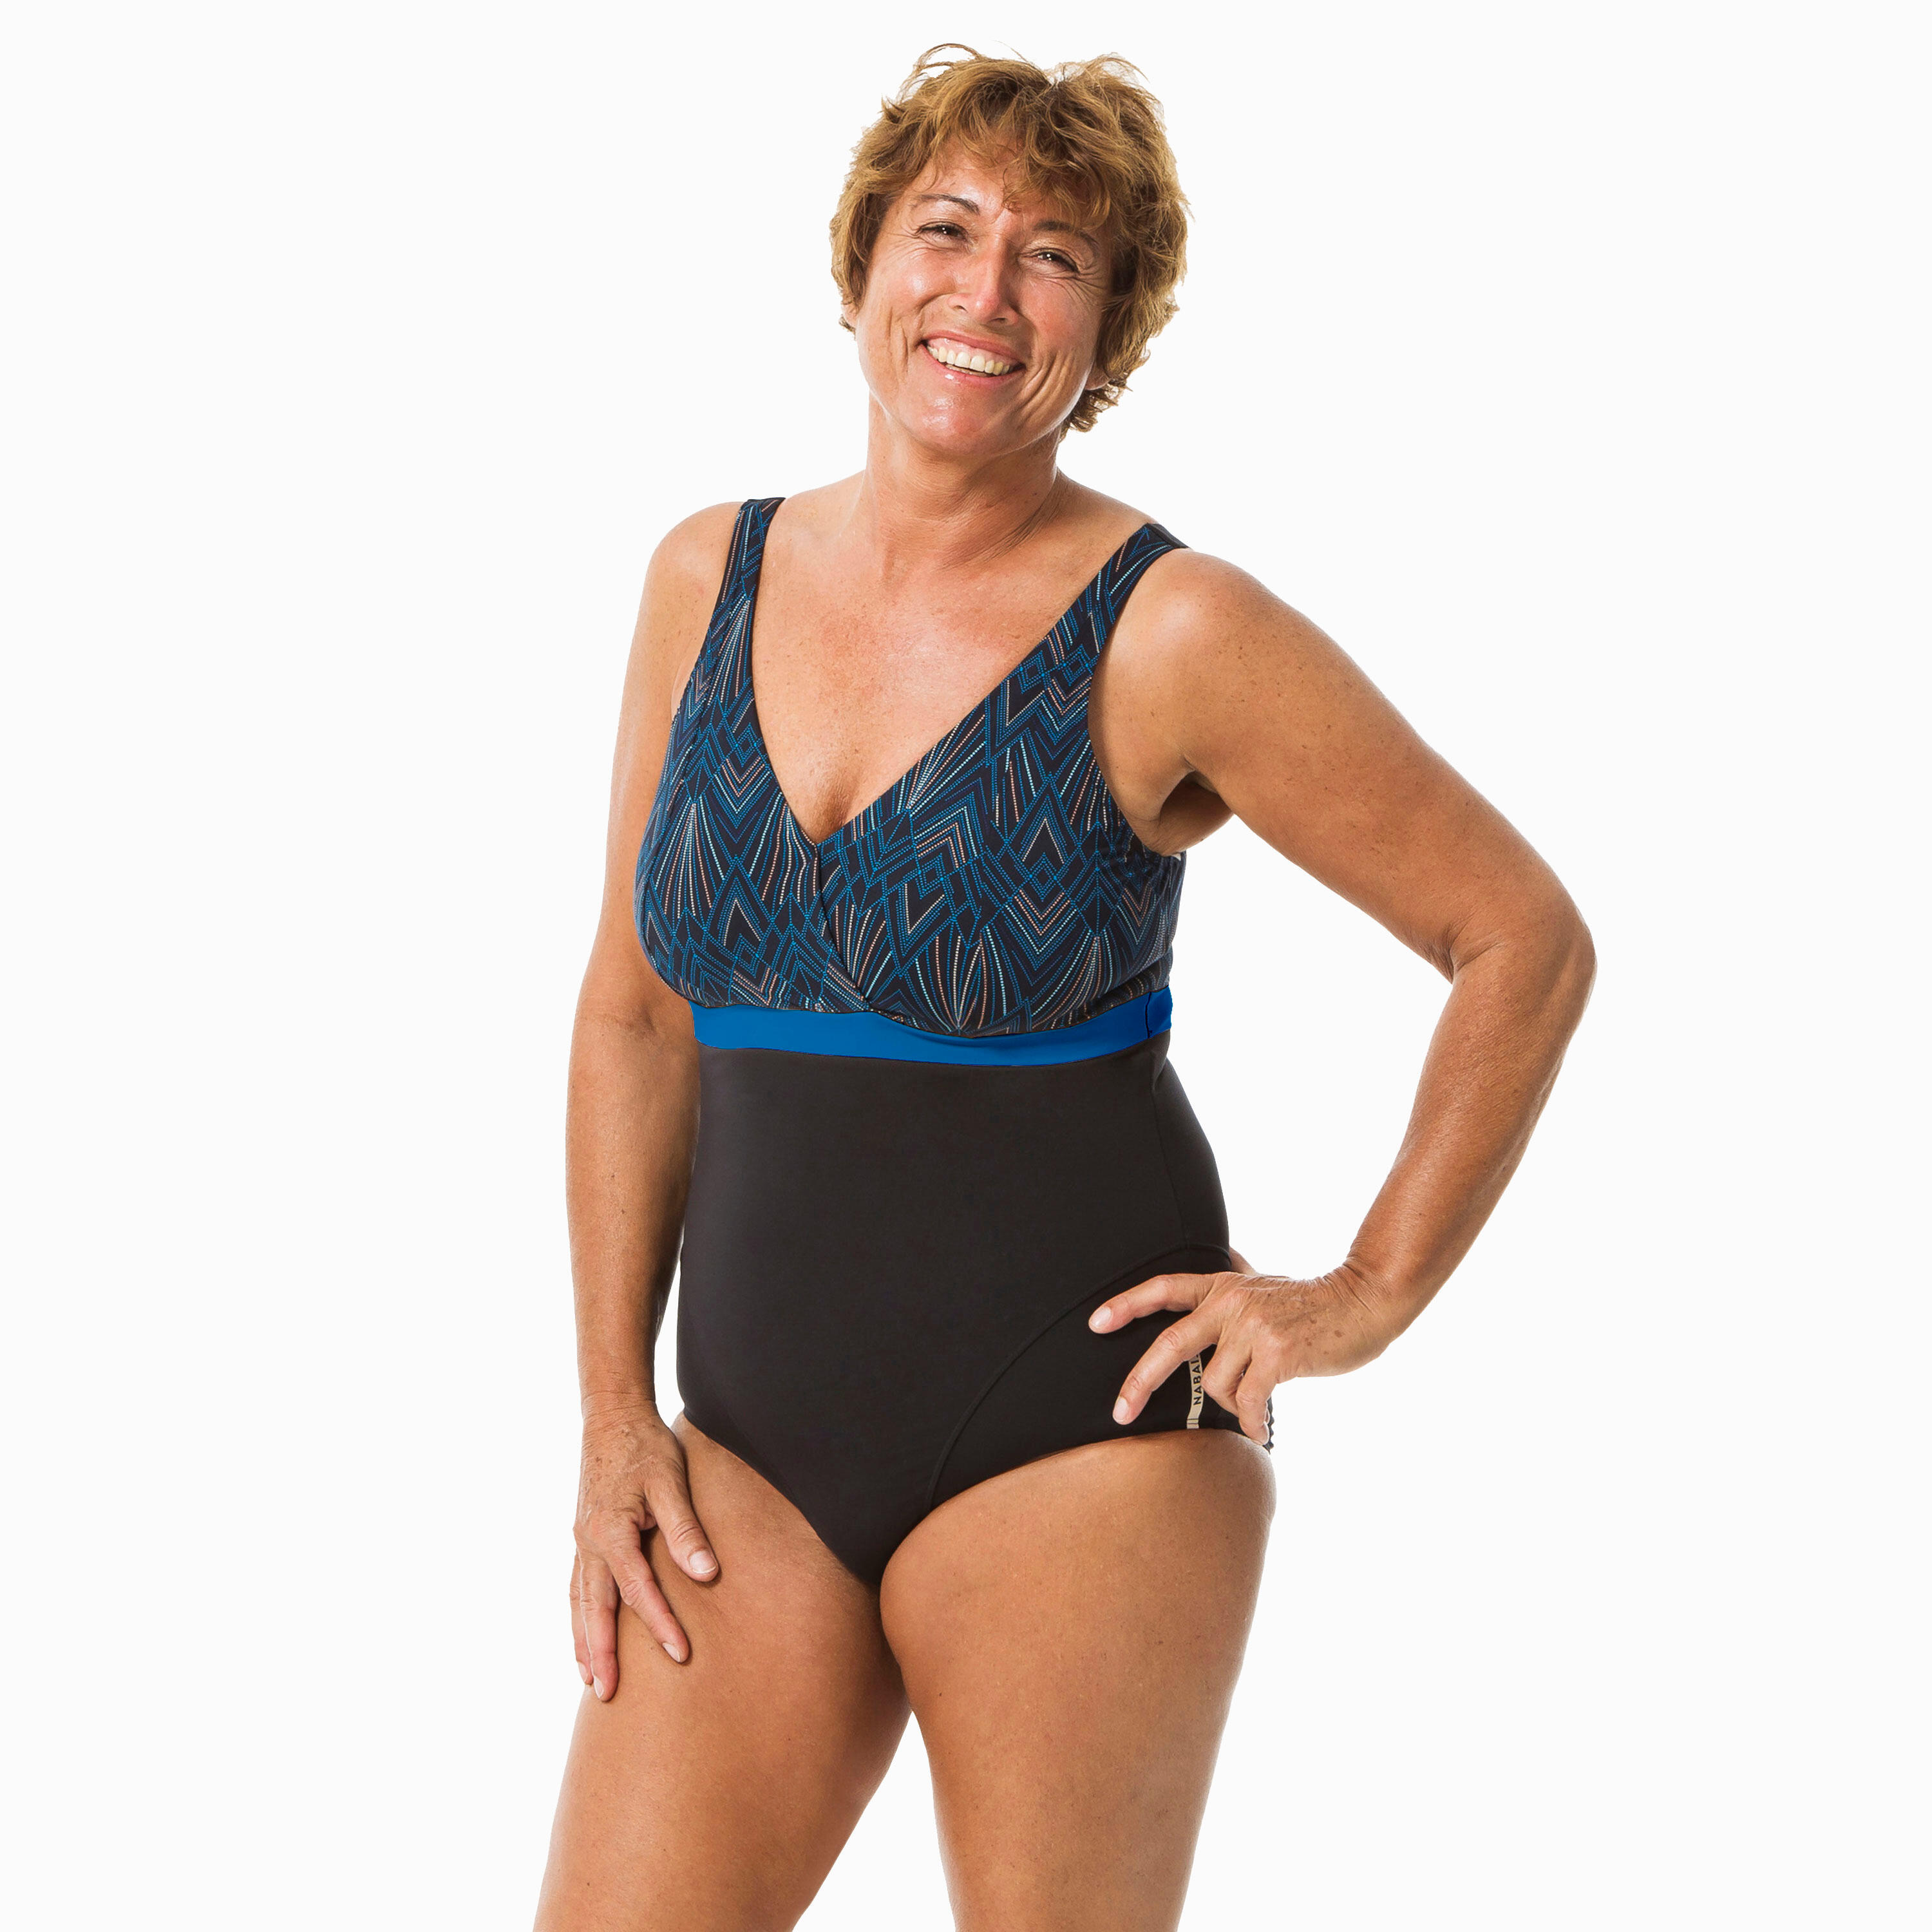 Women’s Aquafitness 1-piece swimsuit Mia Etni Blue black Cup size D/E 1/6